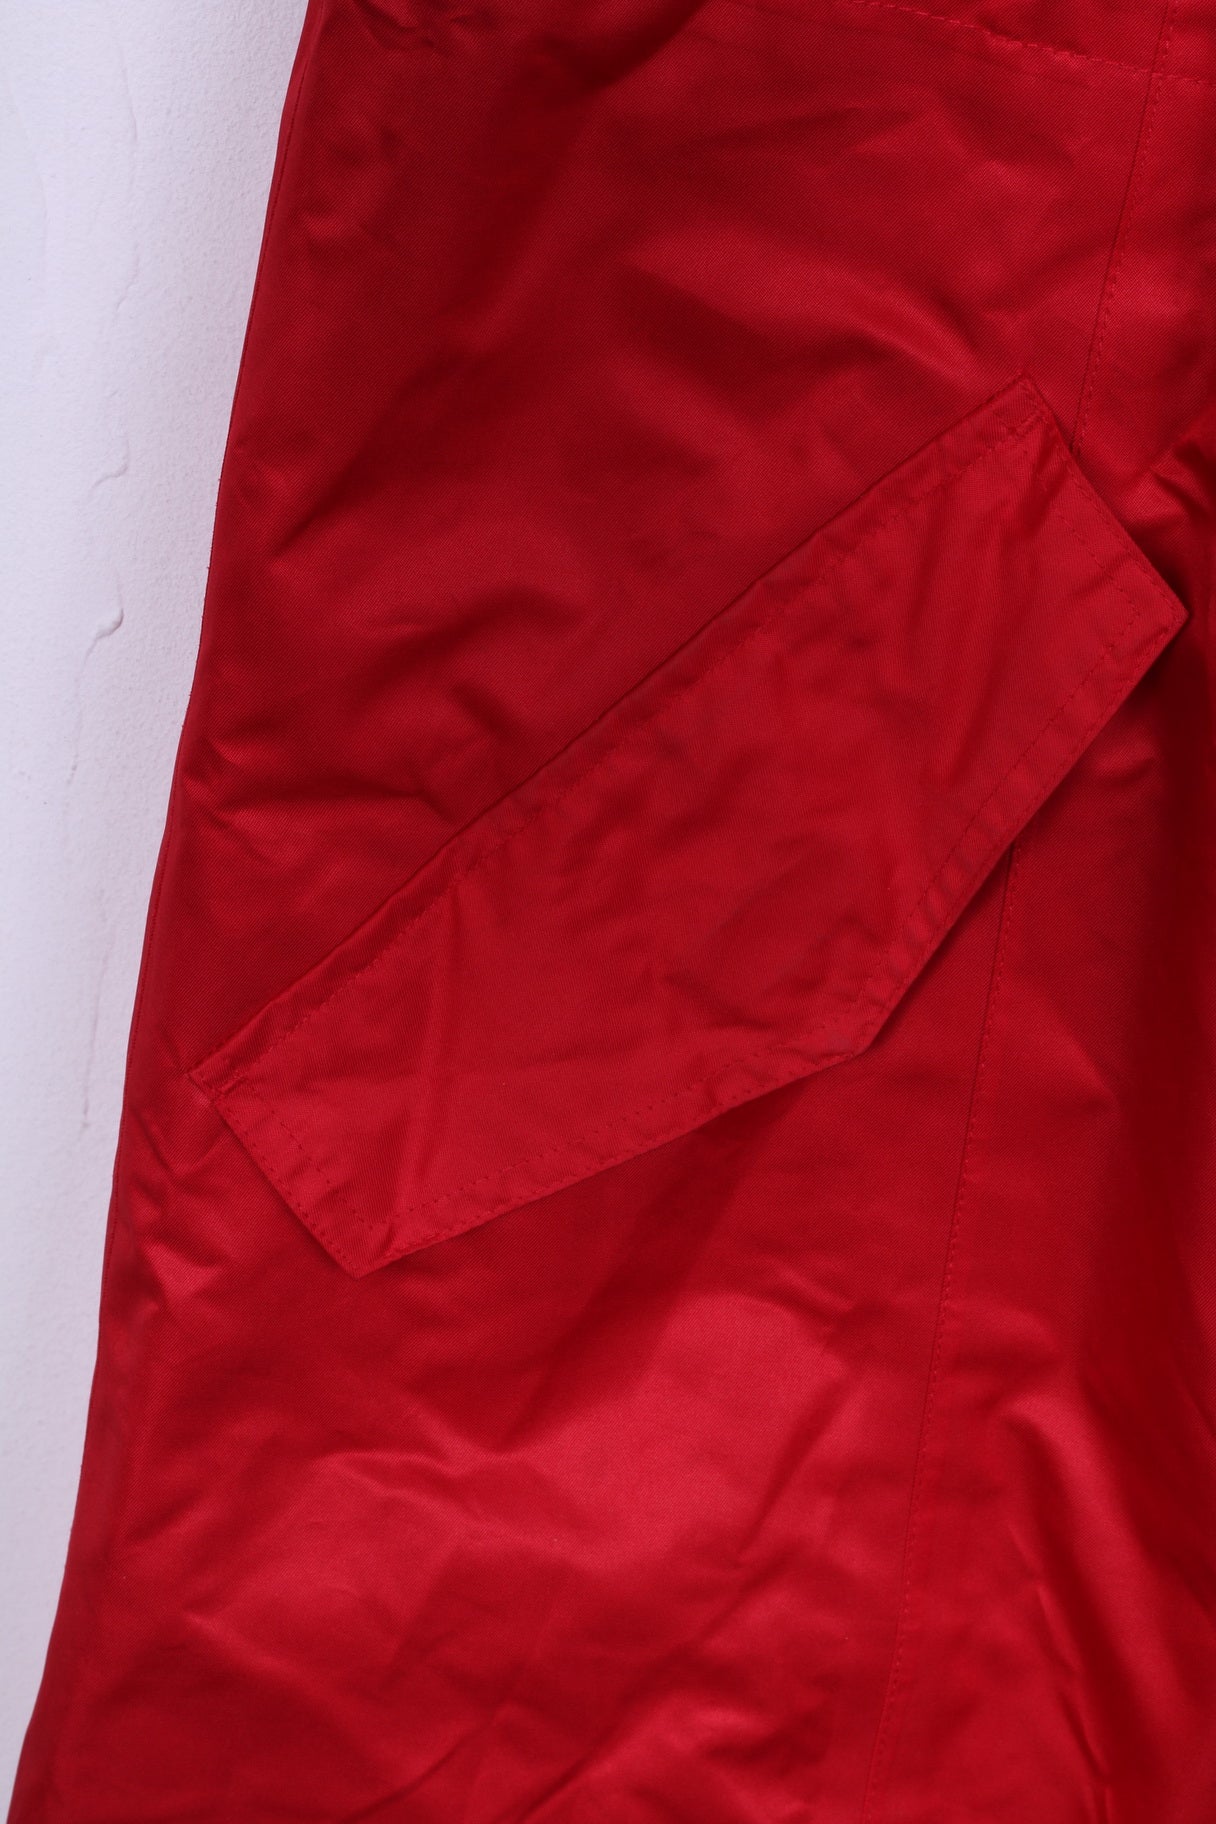 Blue Motion Womens M 40/42 Coat Red Full Zipper Pocket Outdoor Jacket